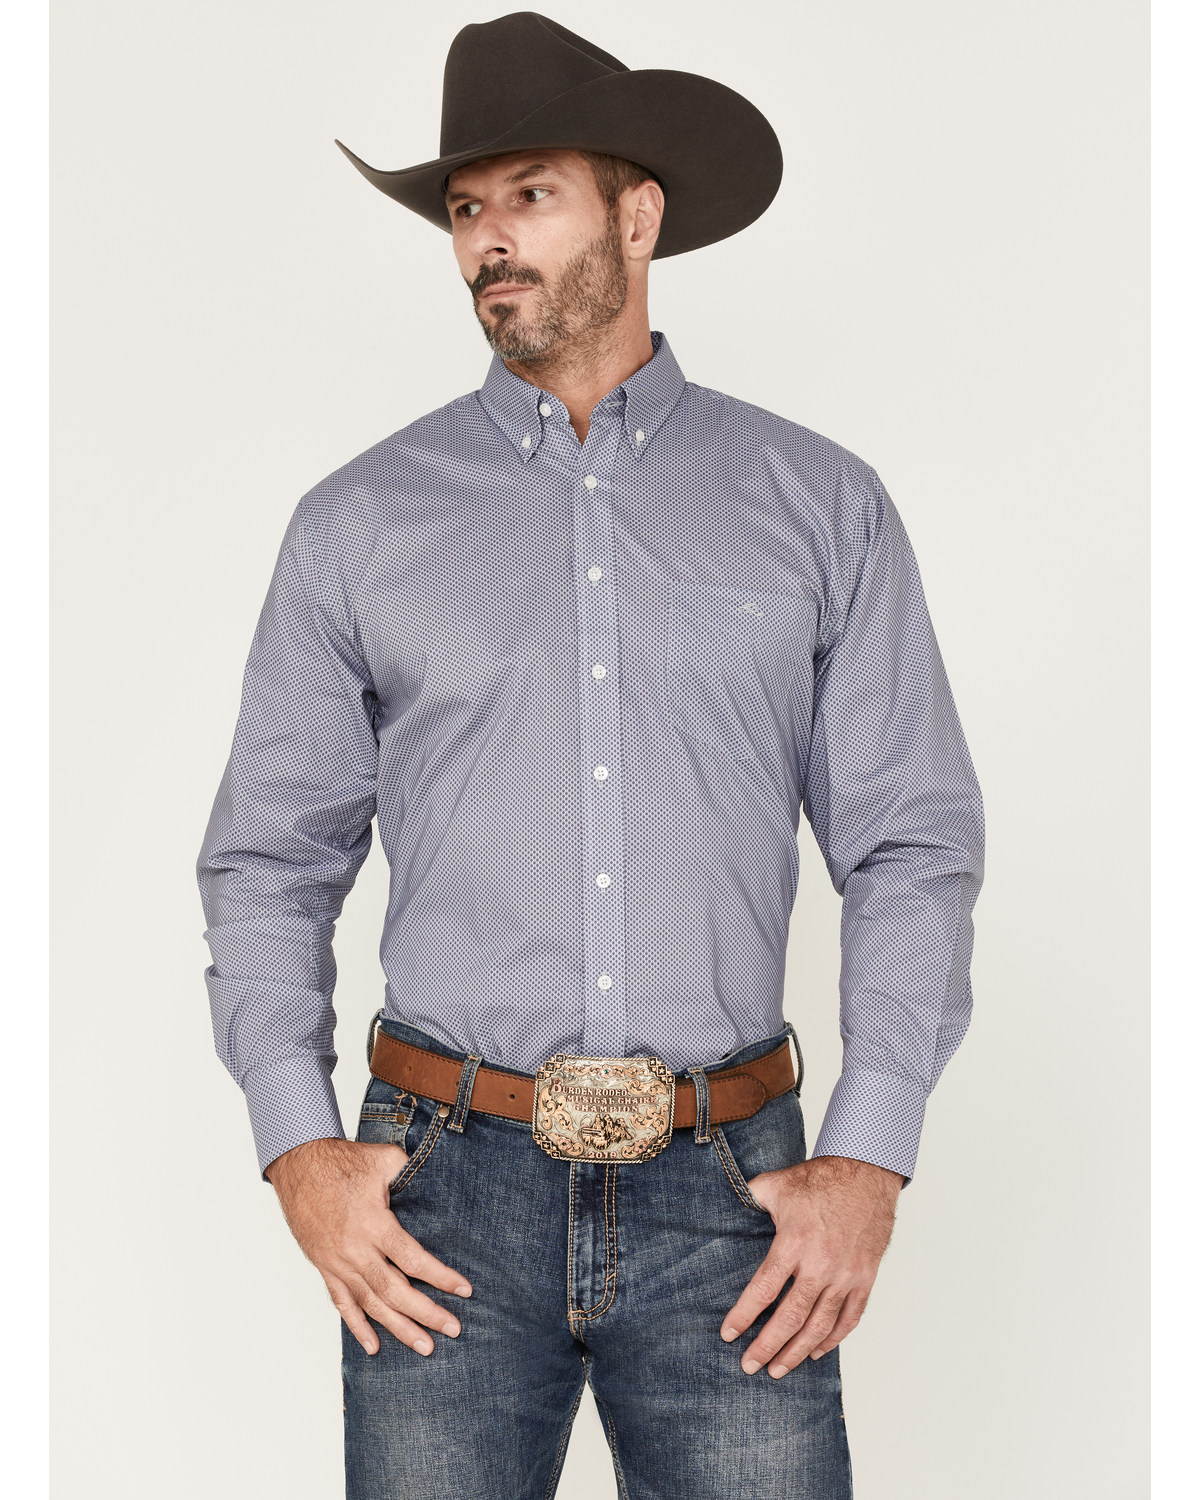 Resistol Men's Granite Geo Print Button Down Western Shirt